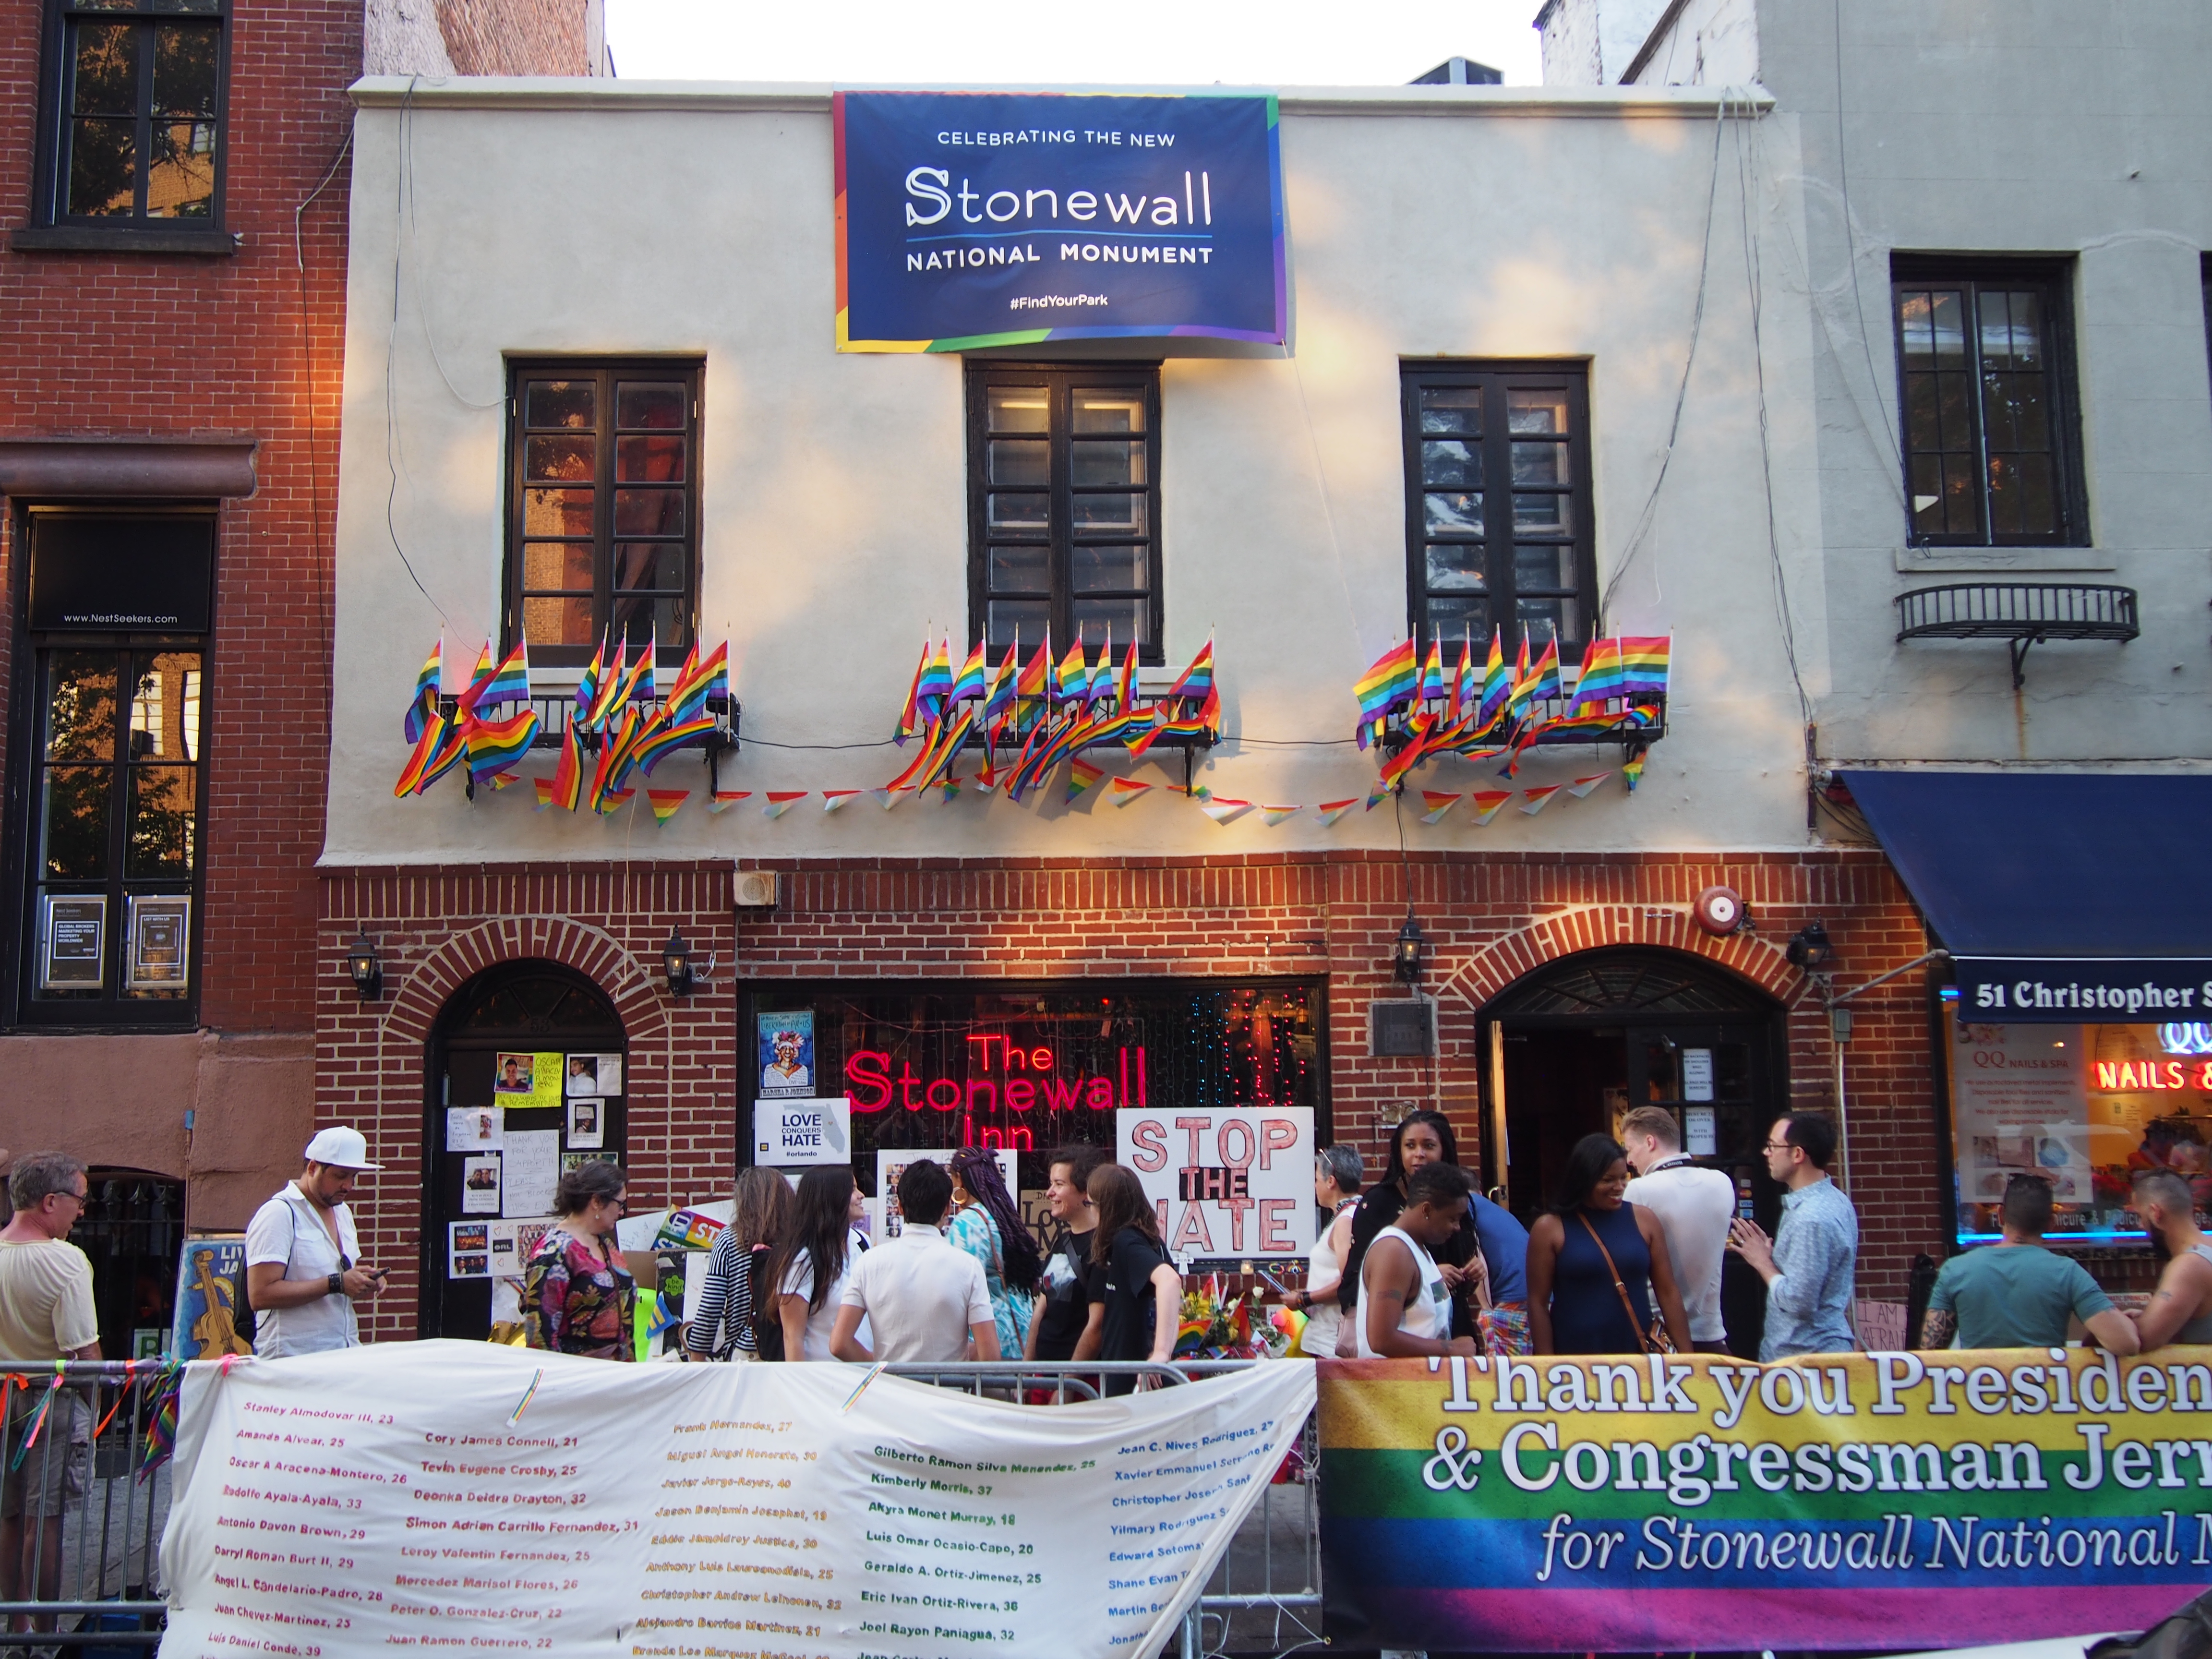 Zi-Zi recommendet city bars center lesbian